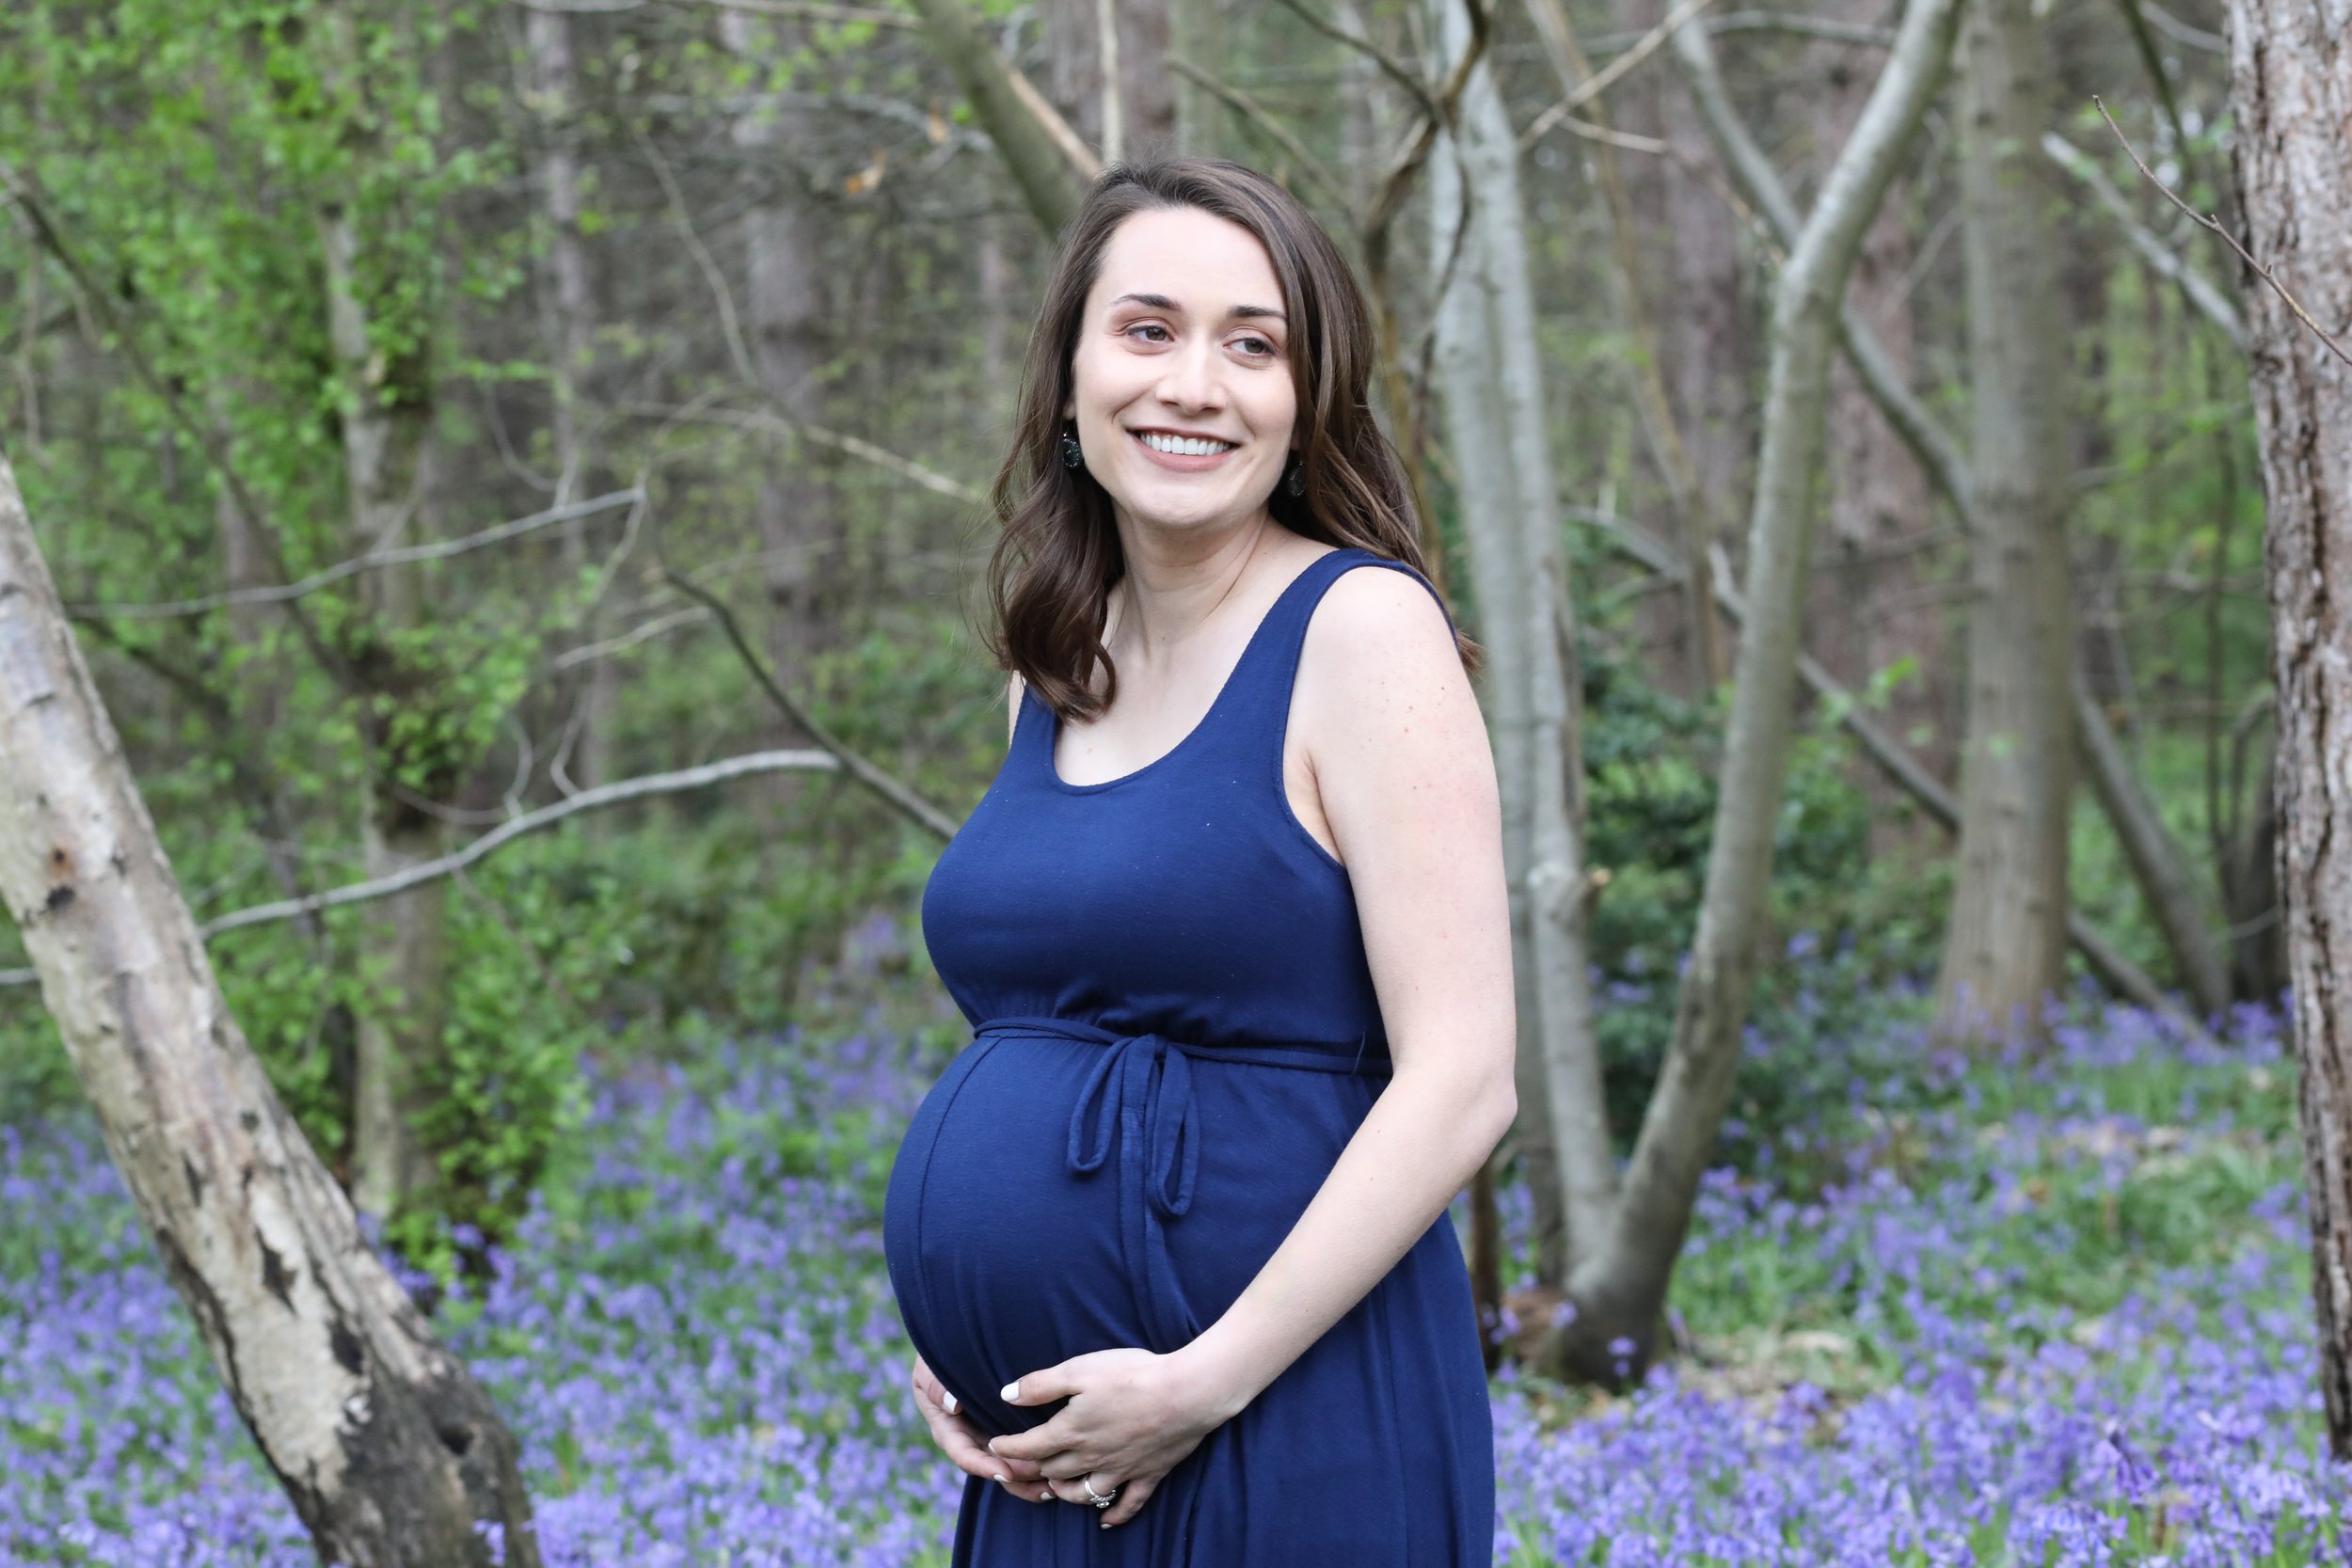 Maternity photo shoot in Berkshire | Bluebell pregnancy photos with Sarah & Bob108 choice .JPG